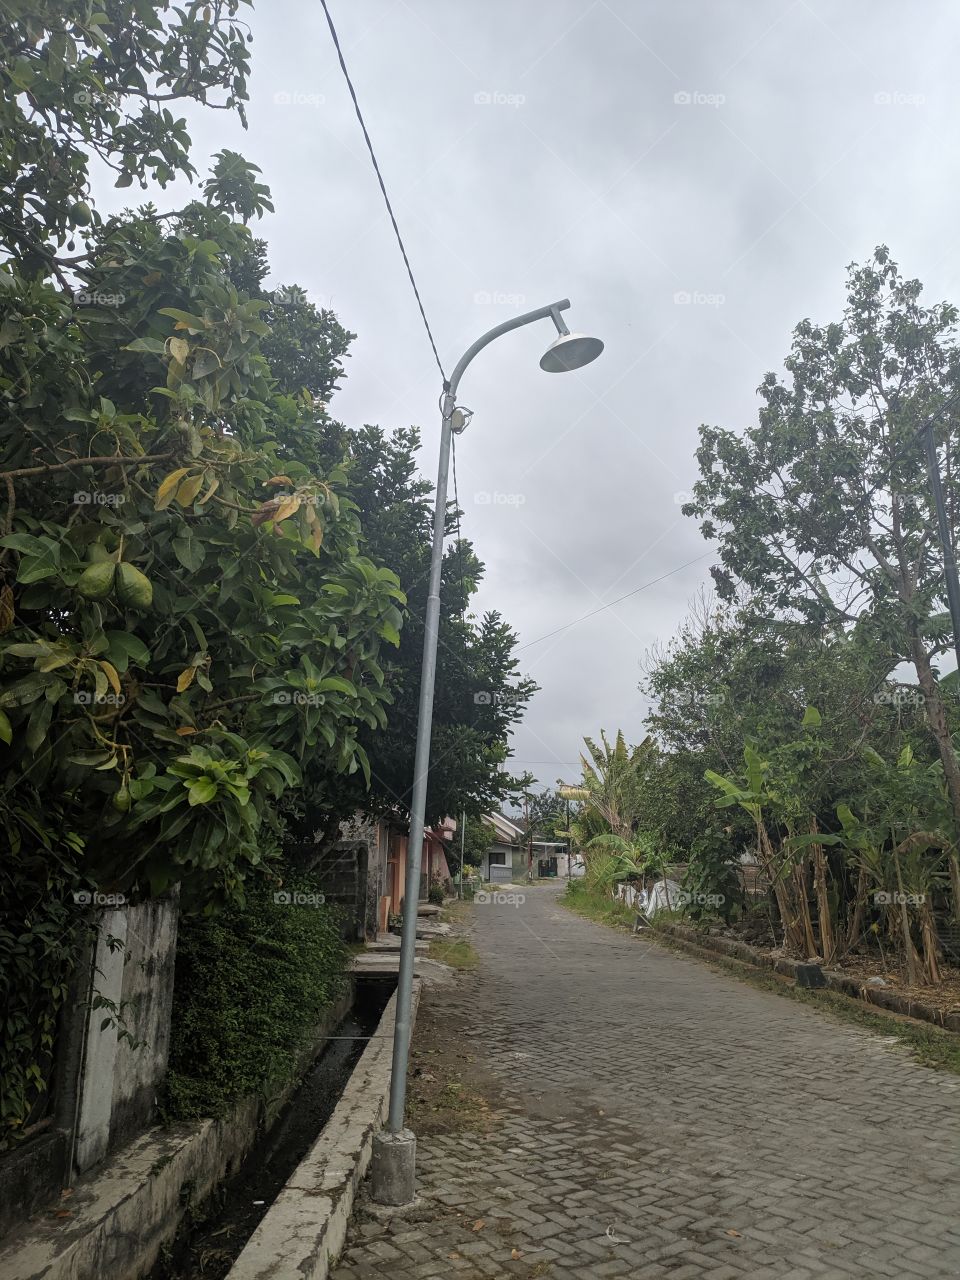 street lights in the village